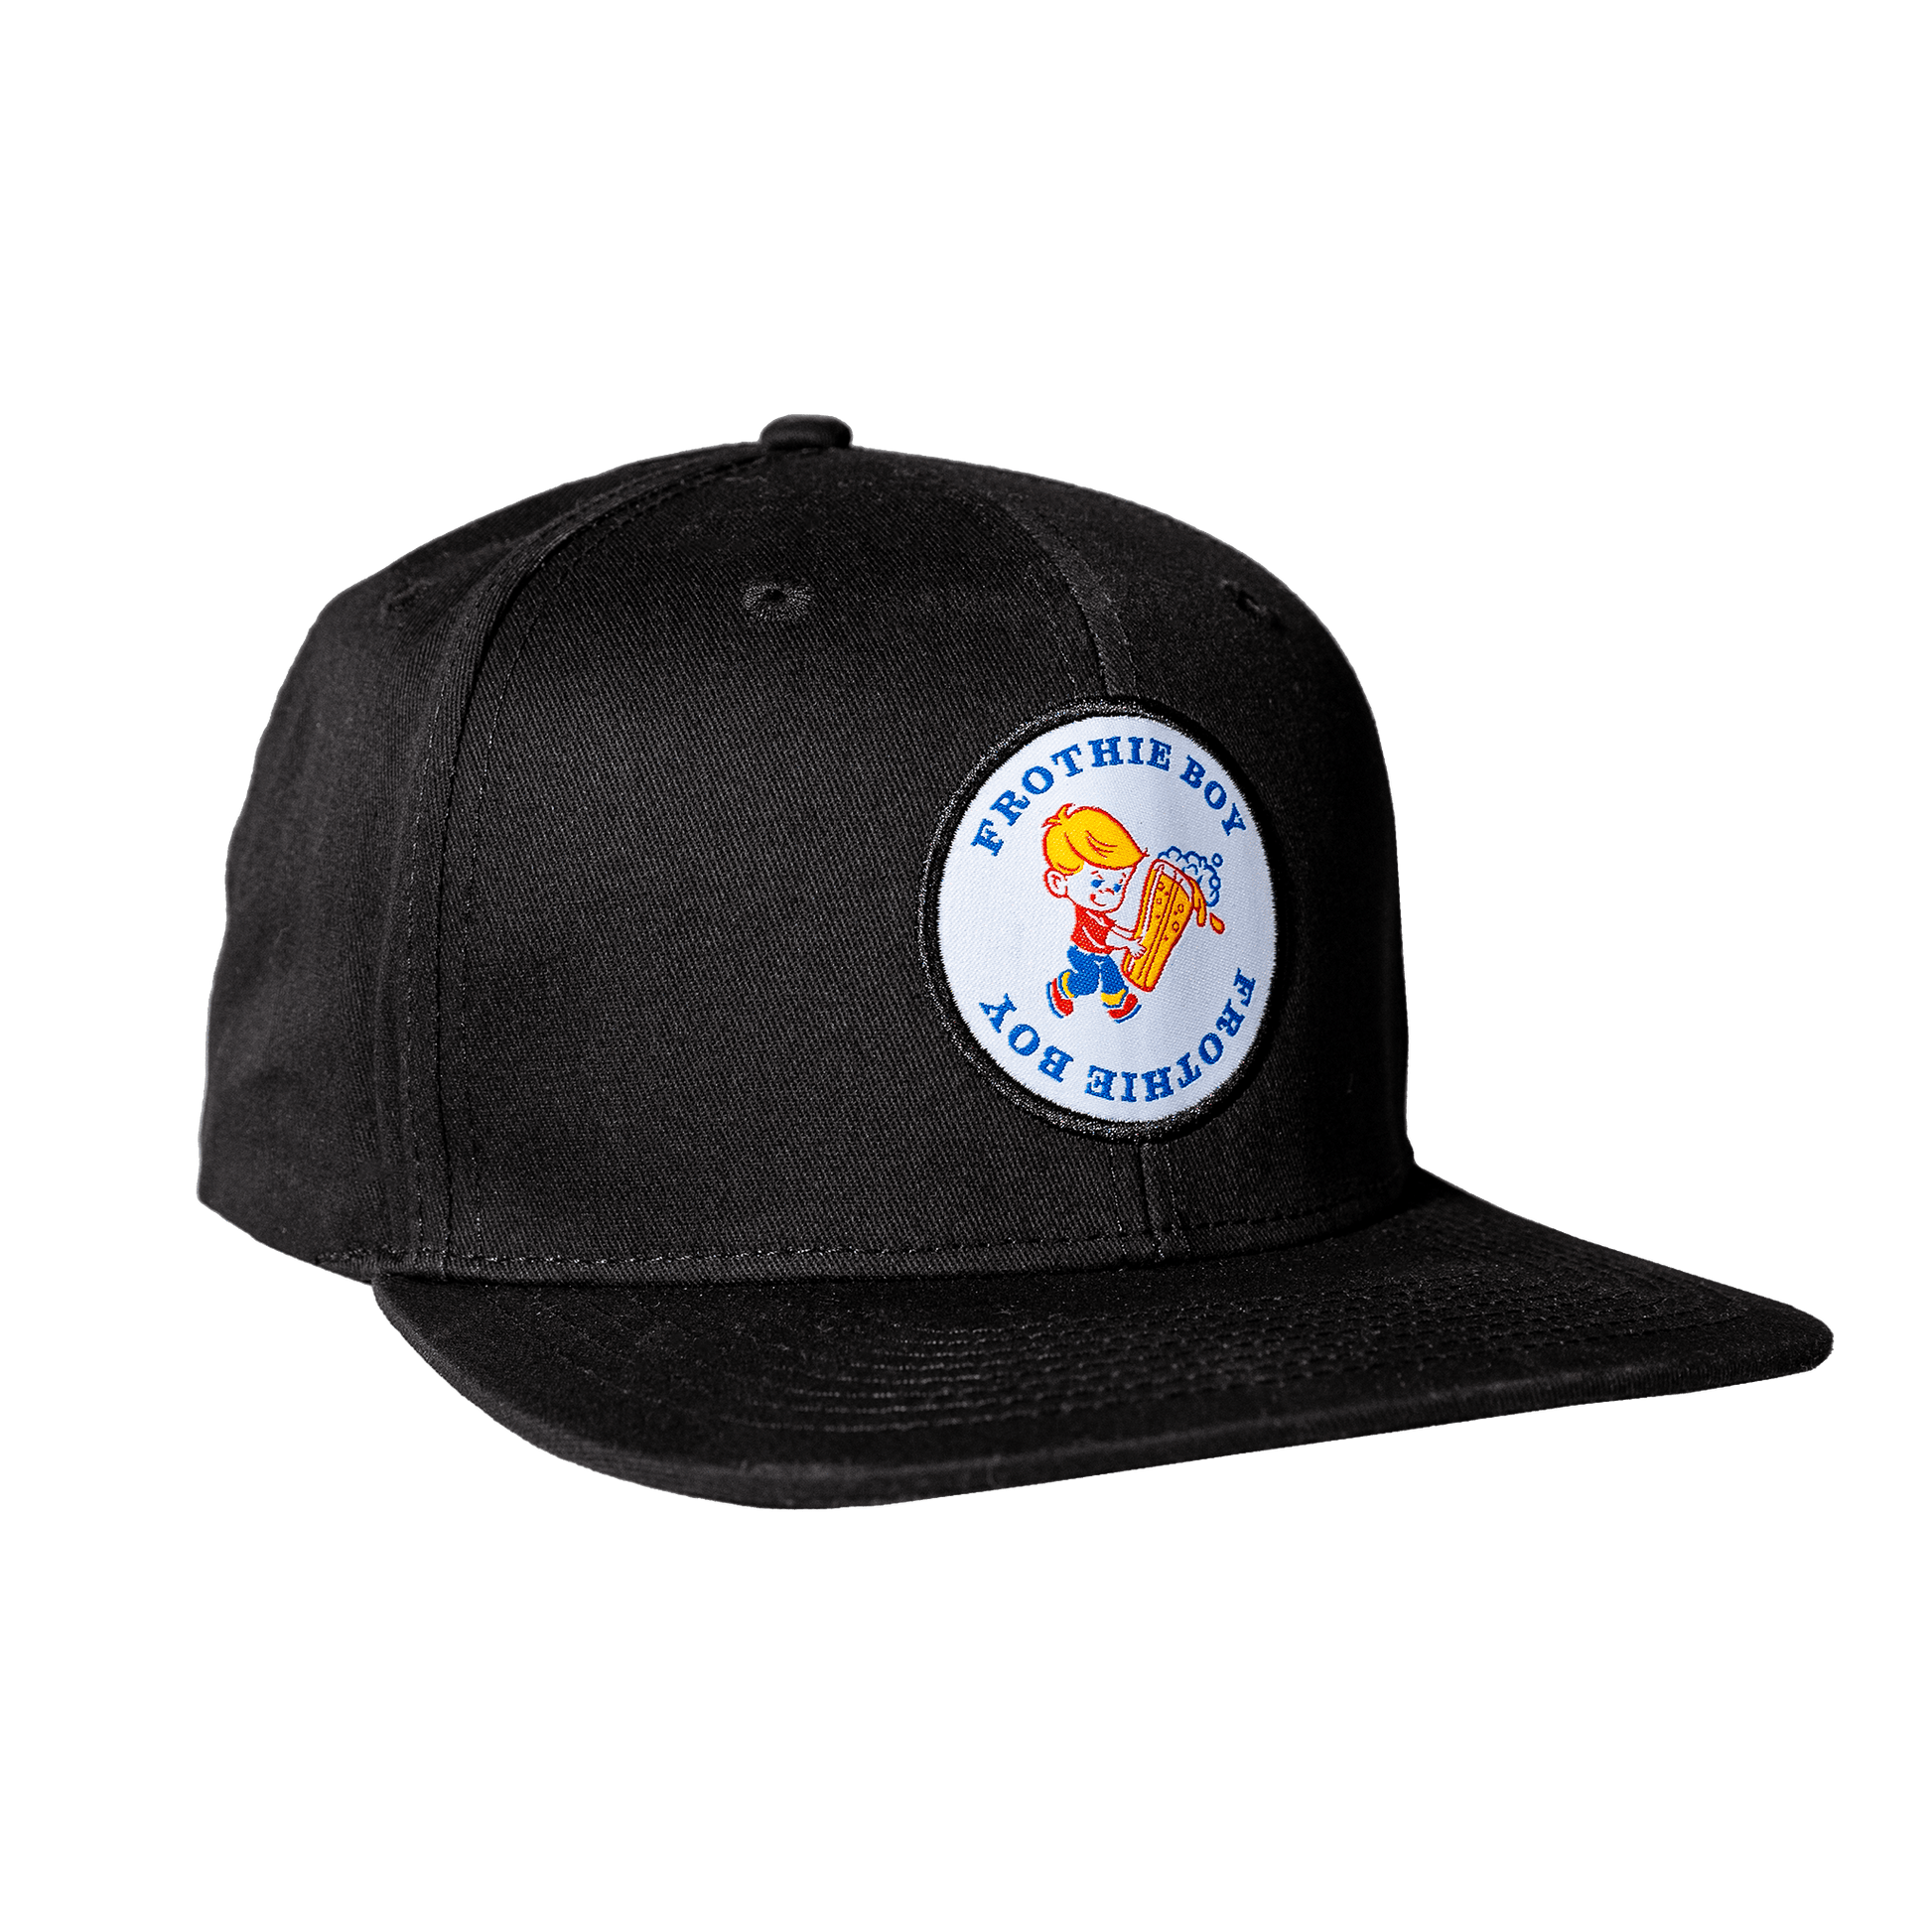 Frothie Boy - Flat Peak Snapback Hat Frothies